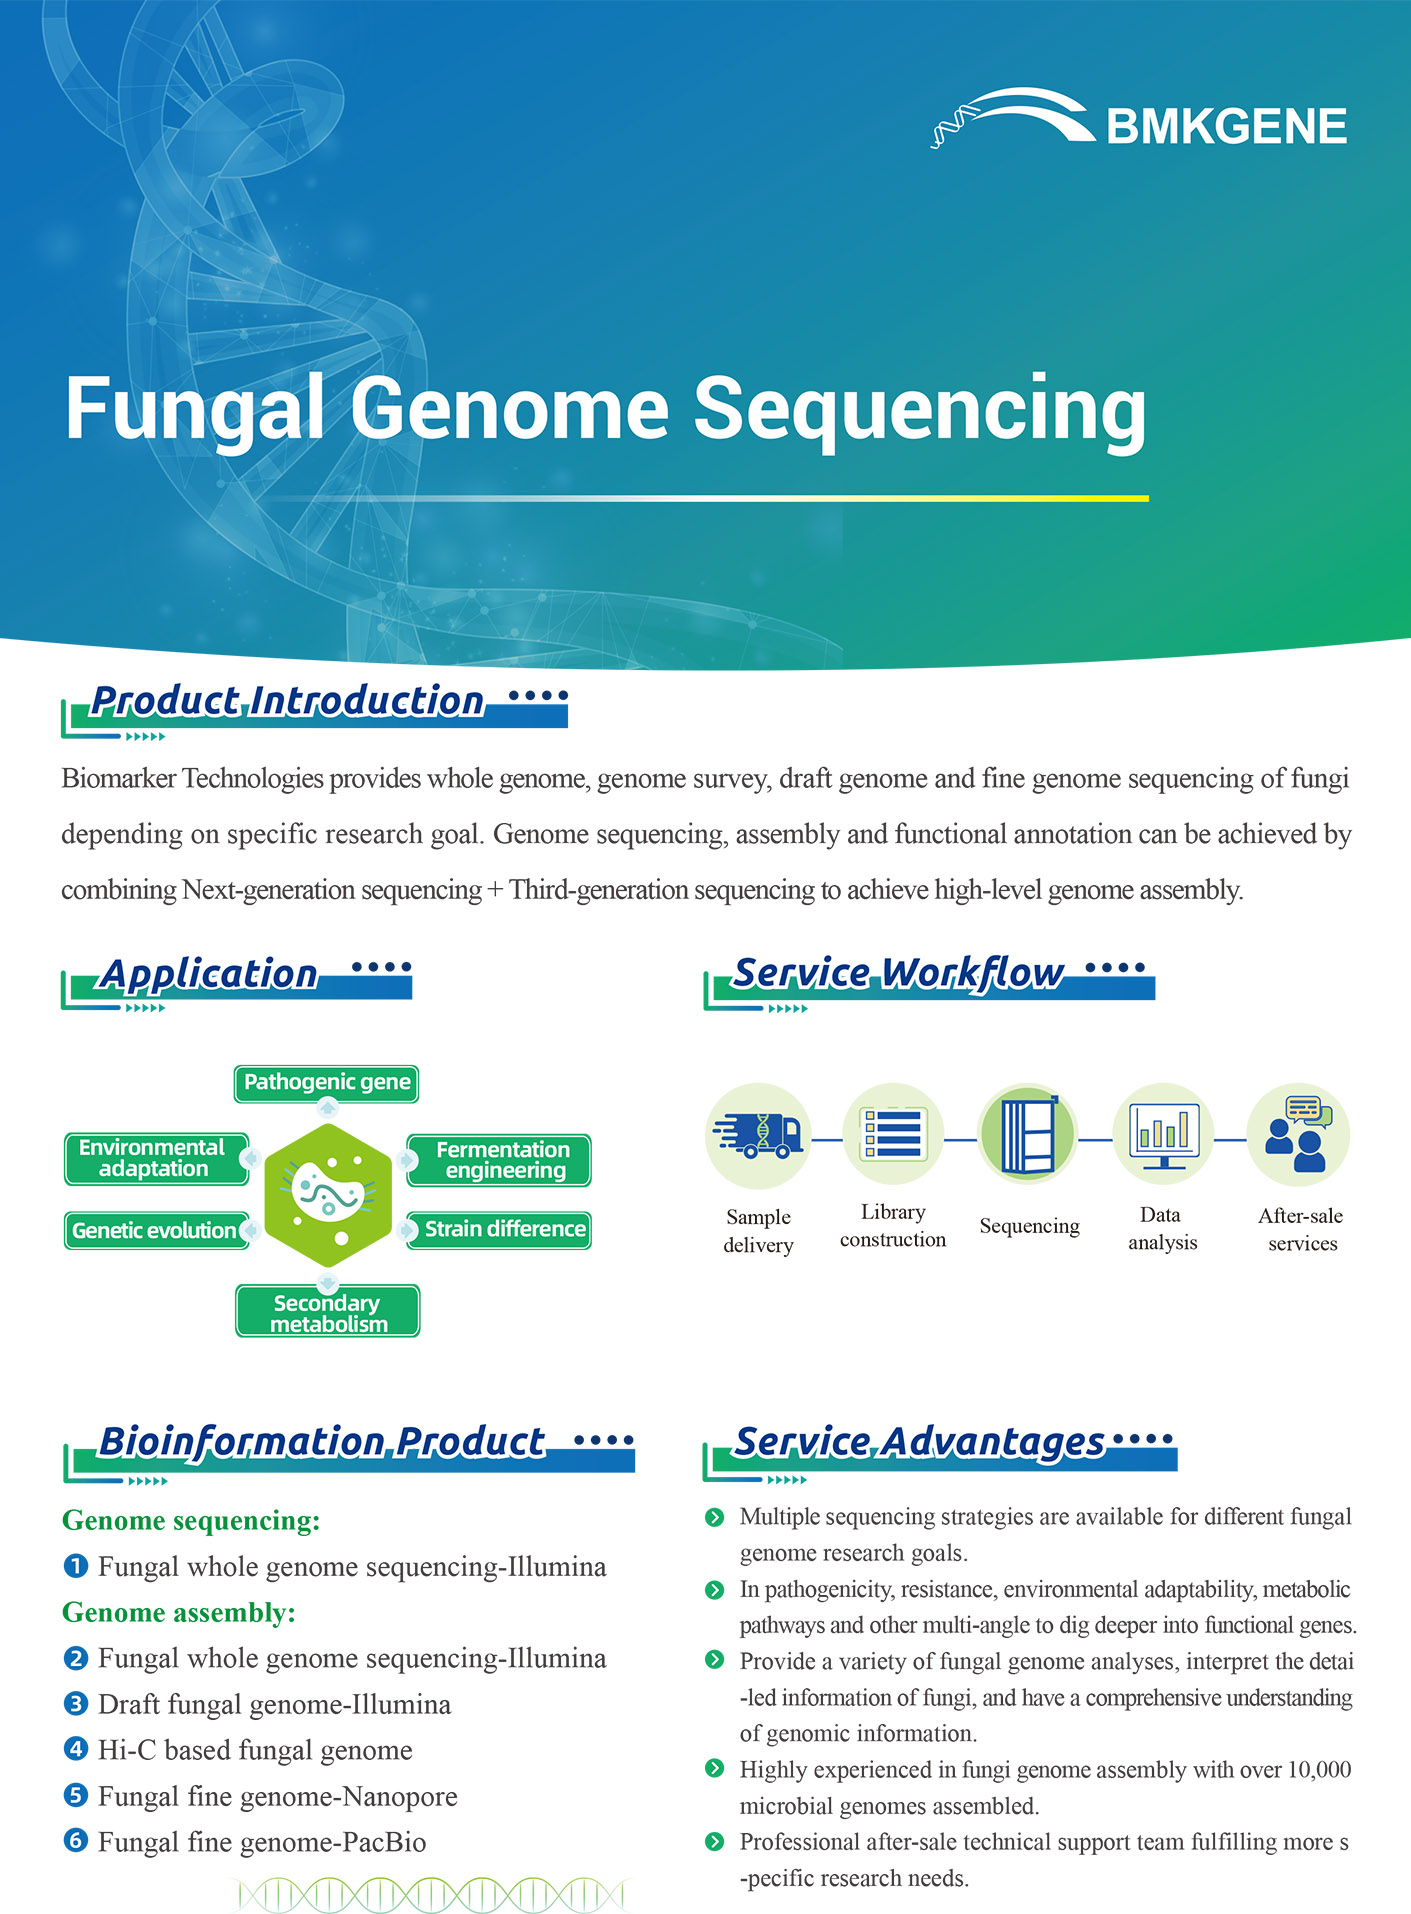 https://www.bmkgene.com/uploads/Fungal-Genome-Sequencing-BMKGENE-2023.10.pdf